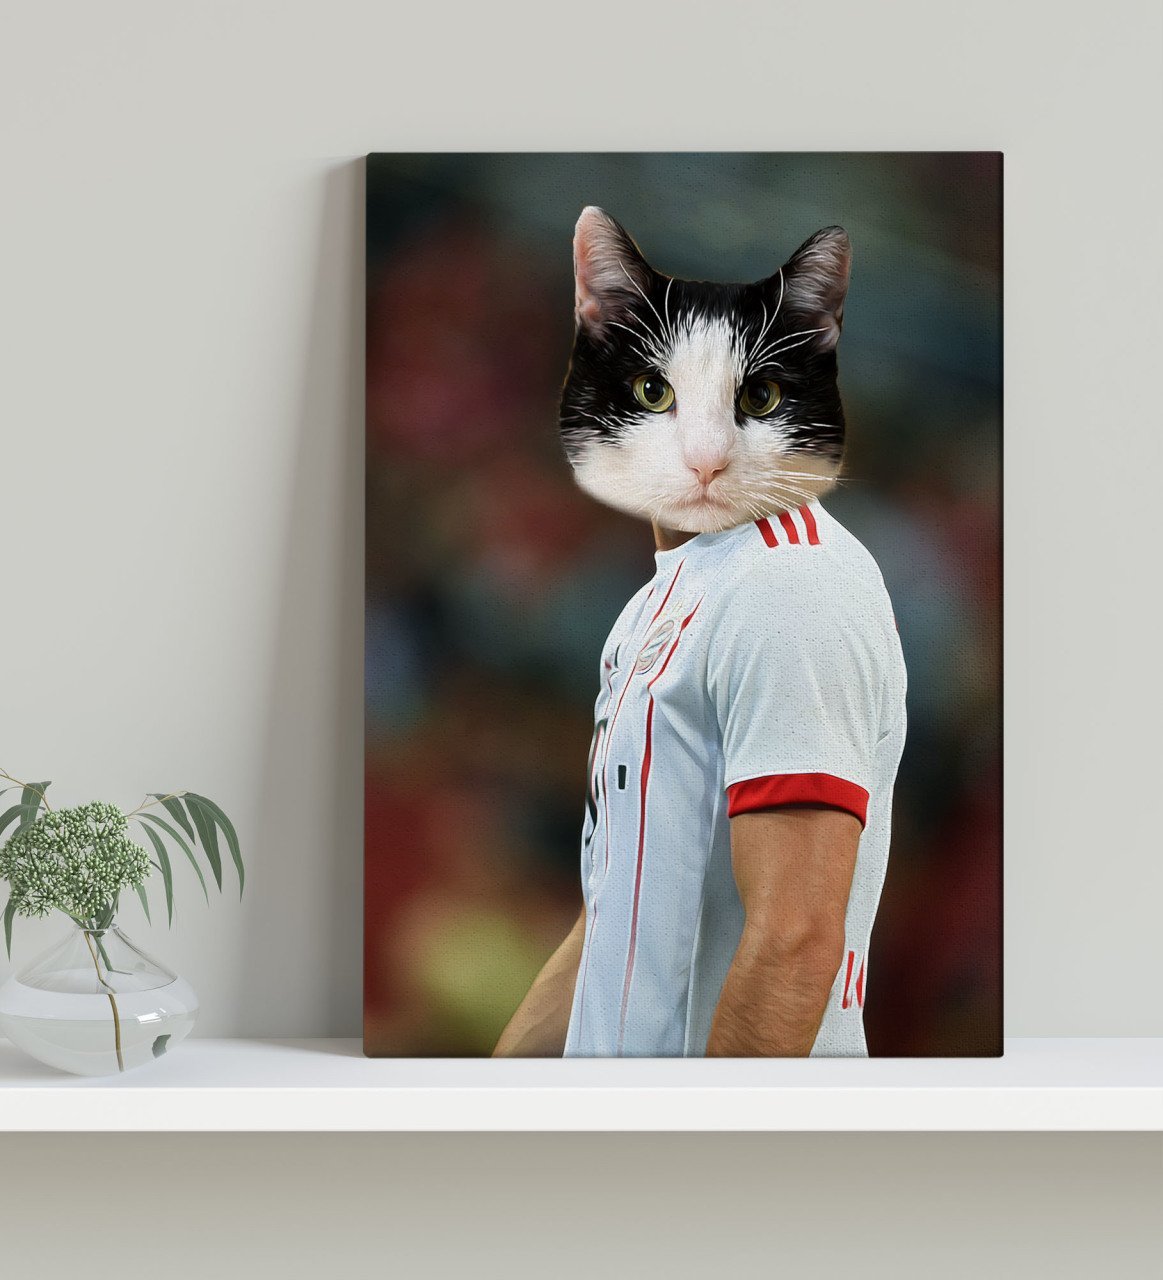 Evcil Dostlara Özel Futbolcu Tasarımlı Portre Kanvas Tablo 30x50cm-1